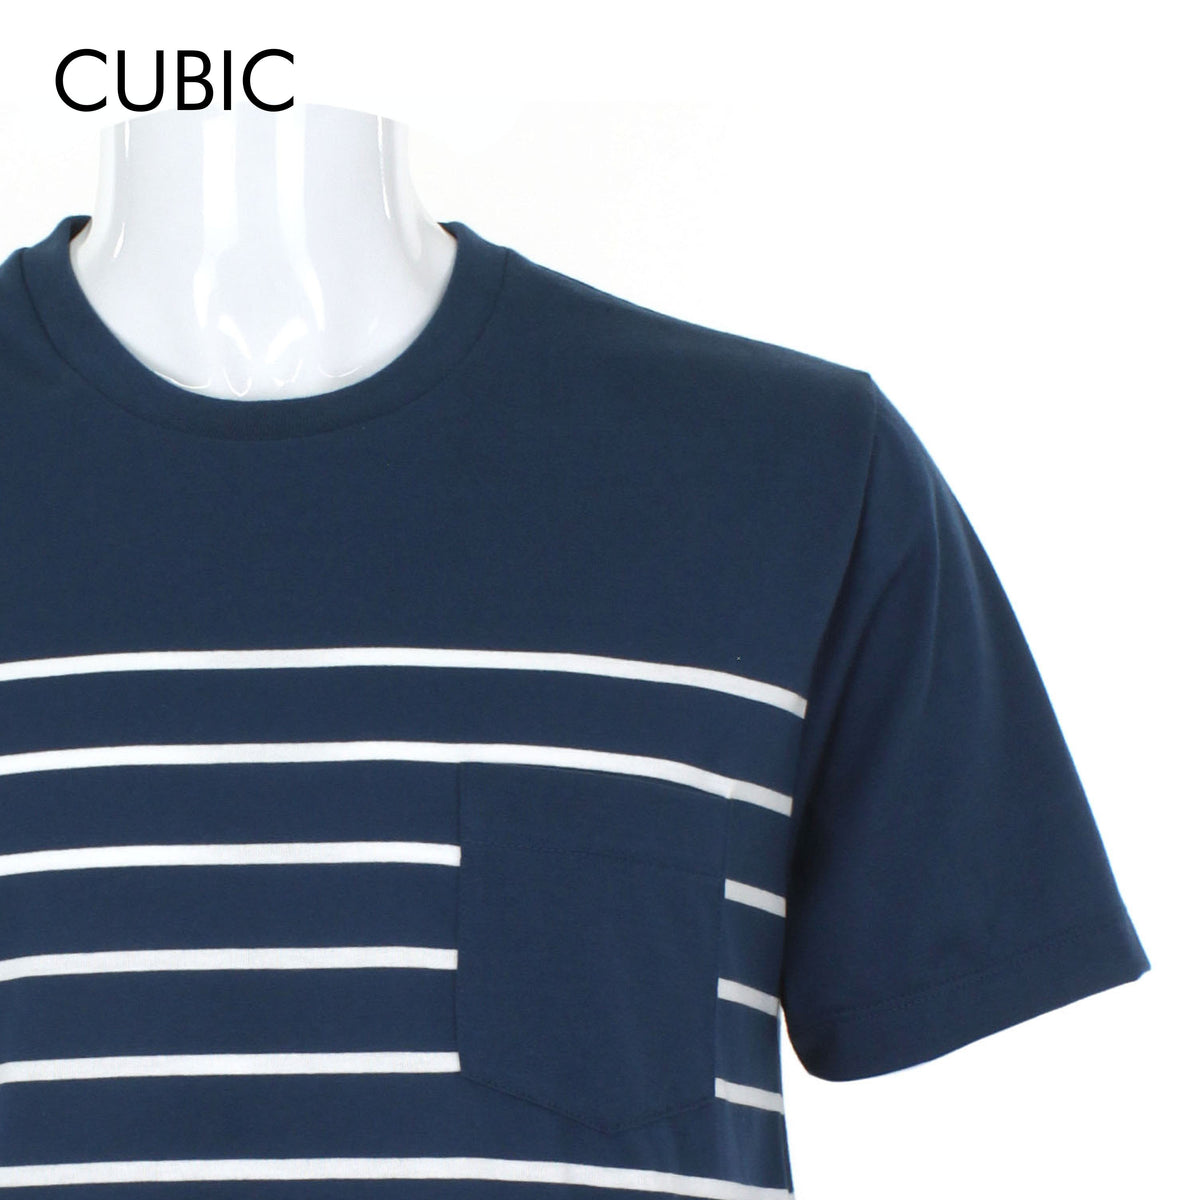 Cubic Men Round Neck Tees T-shirt Stripes Shirt Top Top for Men - CMS2302R